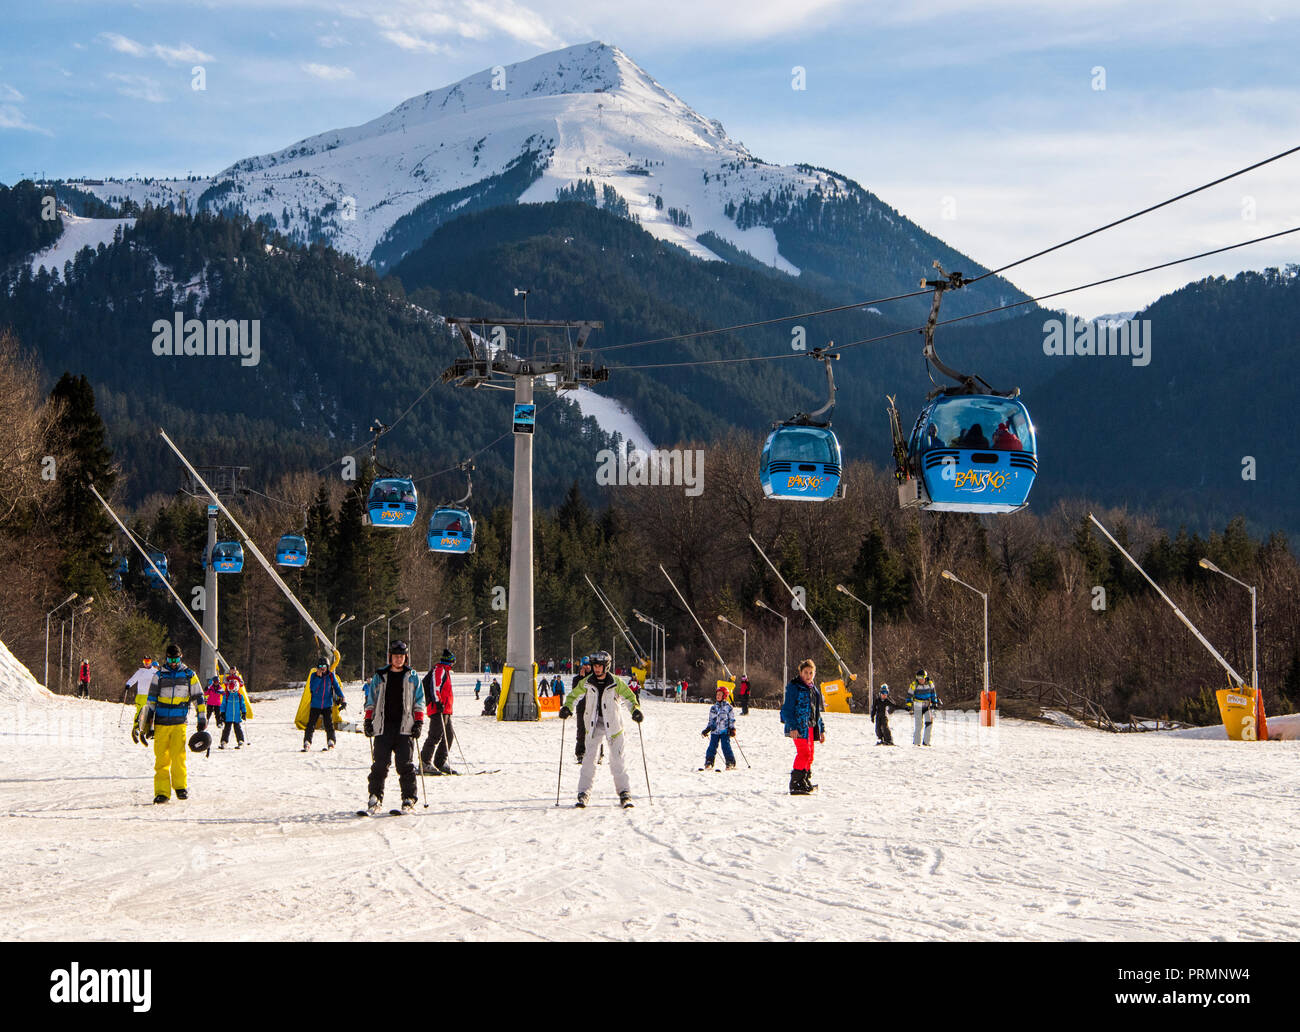 Bansko ski resort, Bulgaria Stock Photo - Alamy